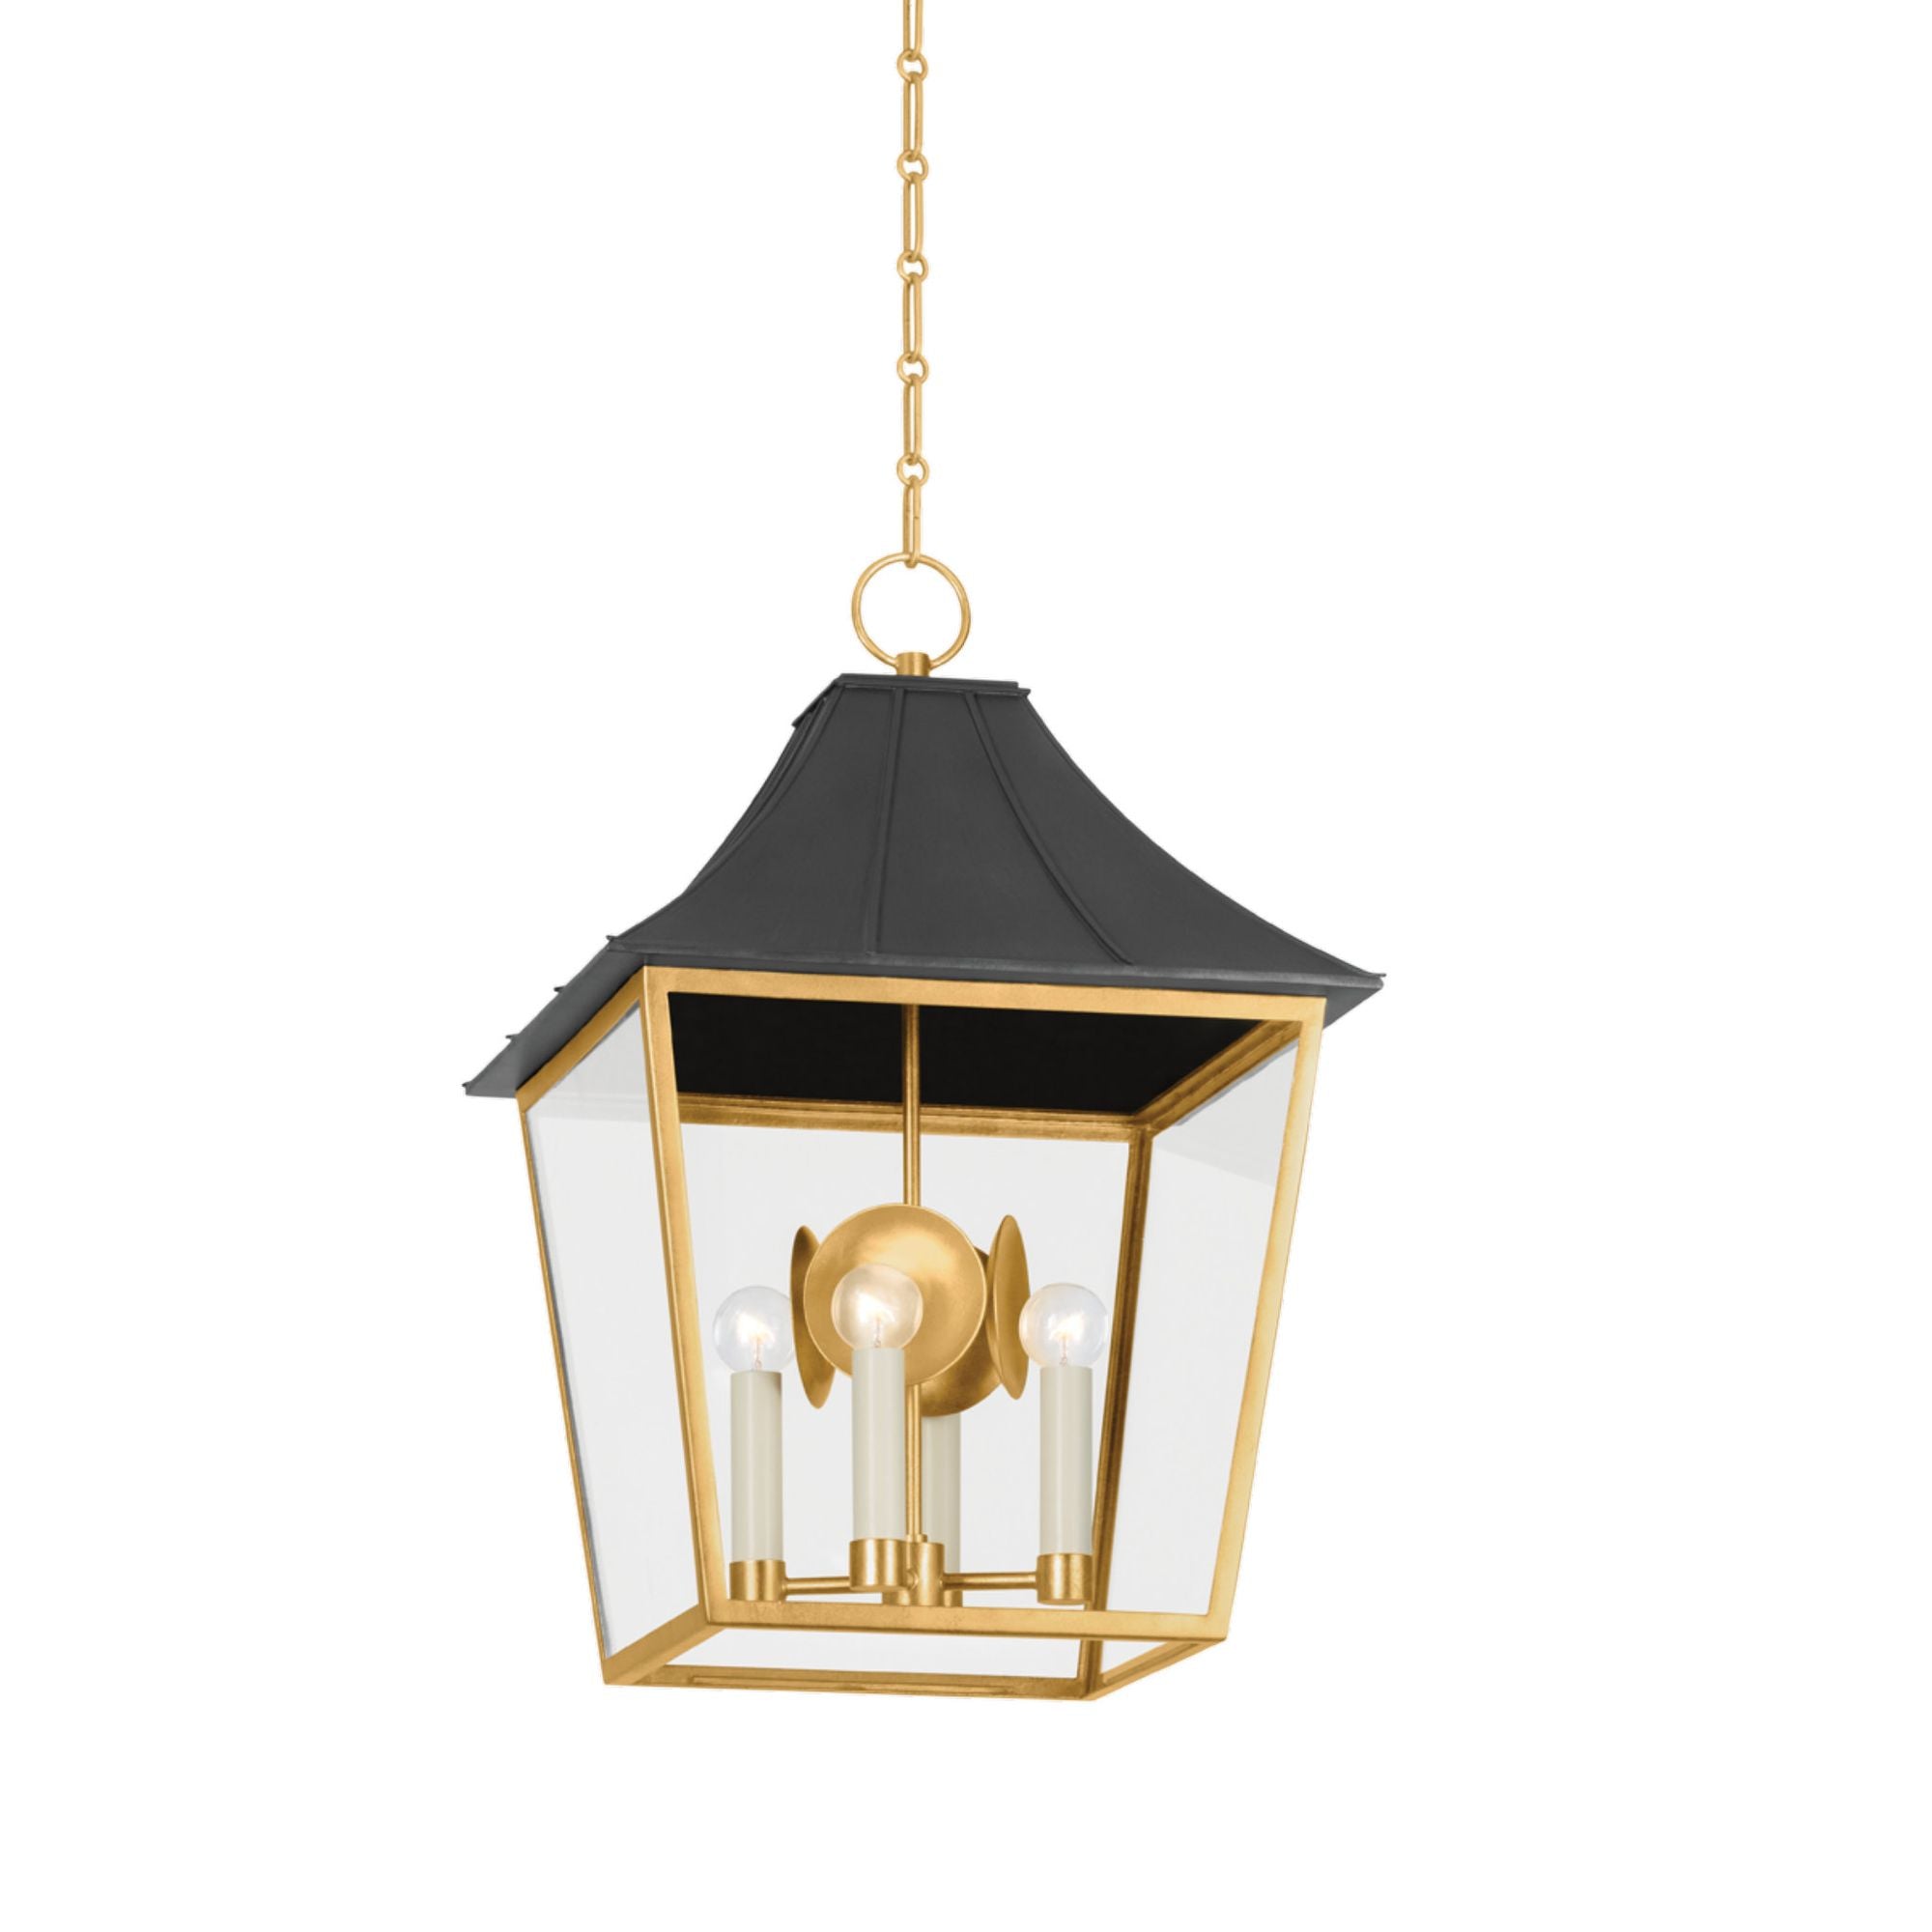 Staatsburg 4 Light Lantern in Vintage Gold Lead/ Graphite